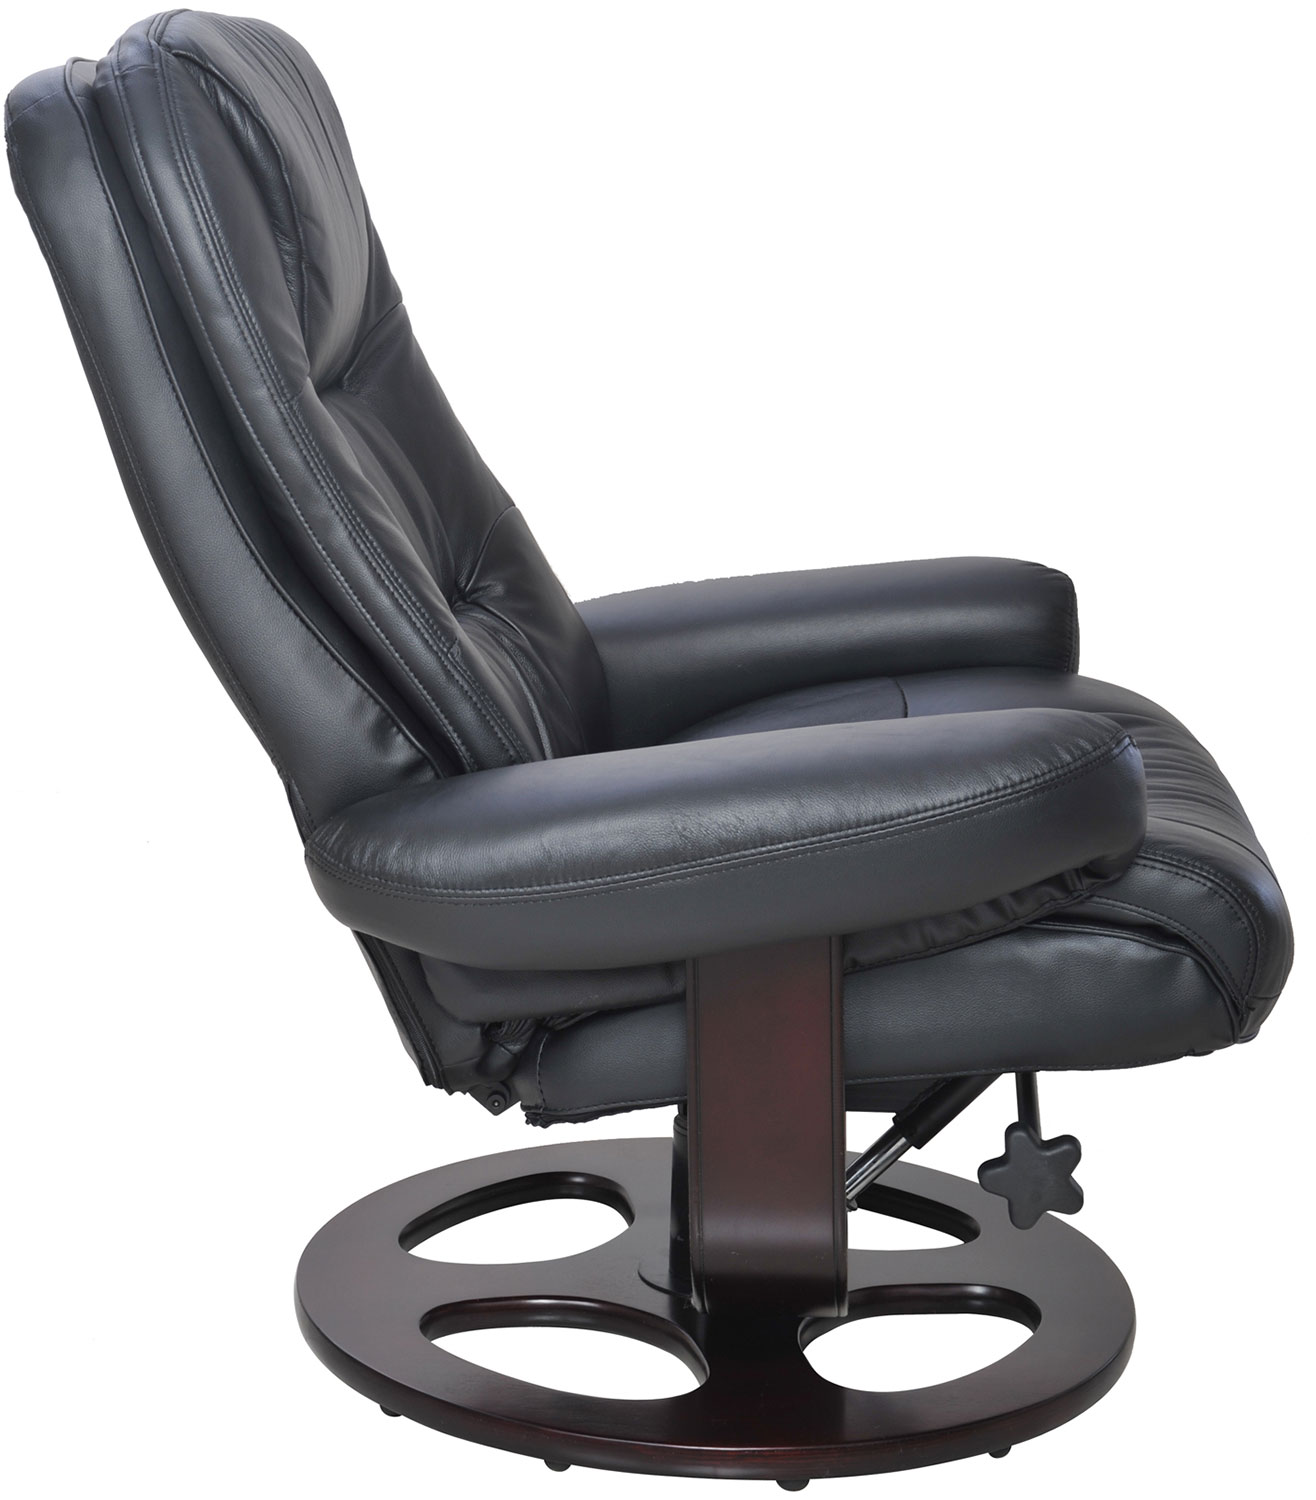 Barcalounger Jacque Pedestal Recliner Chair and Ottoman - Hilton Black/Leather Match